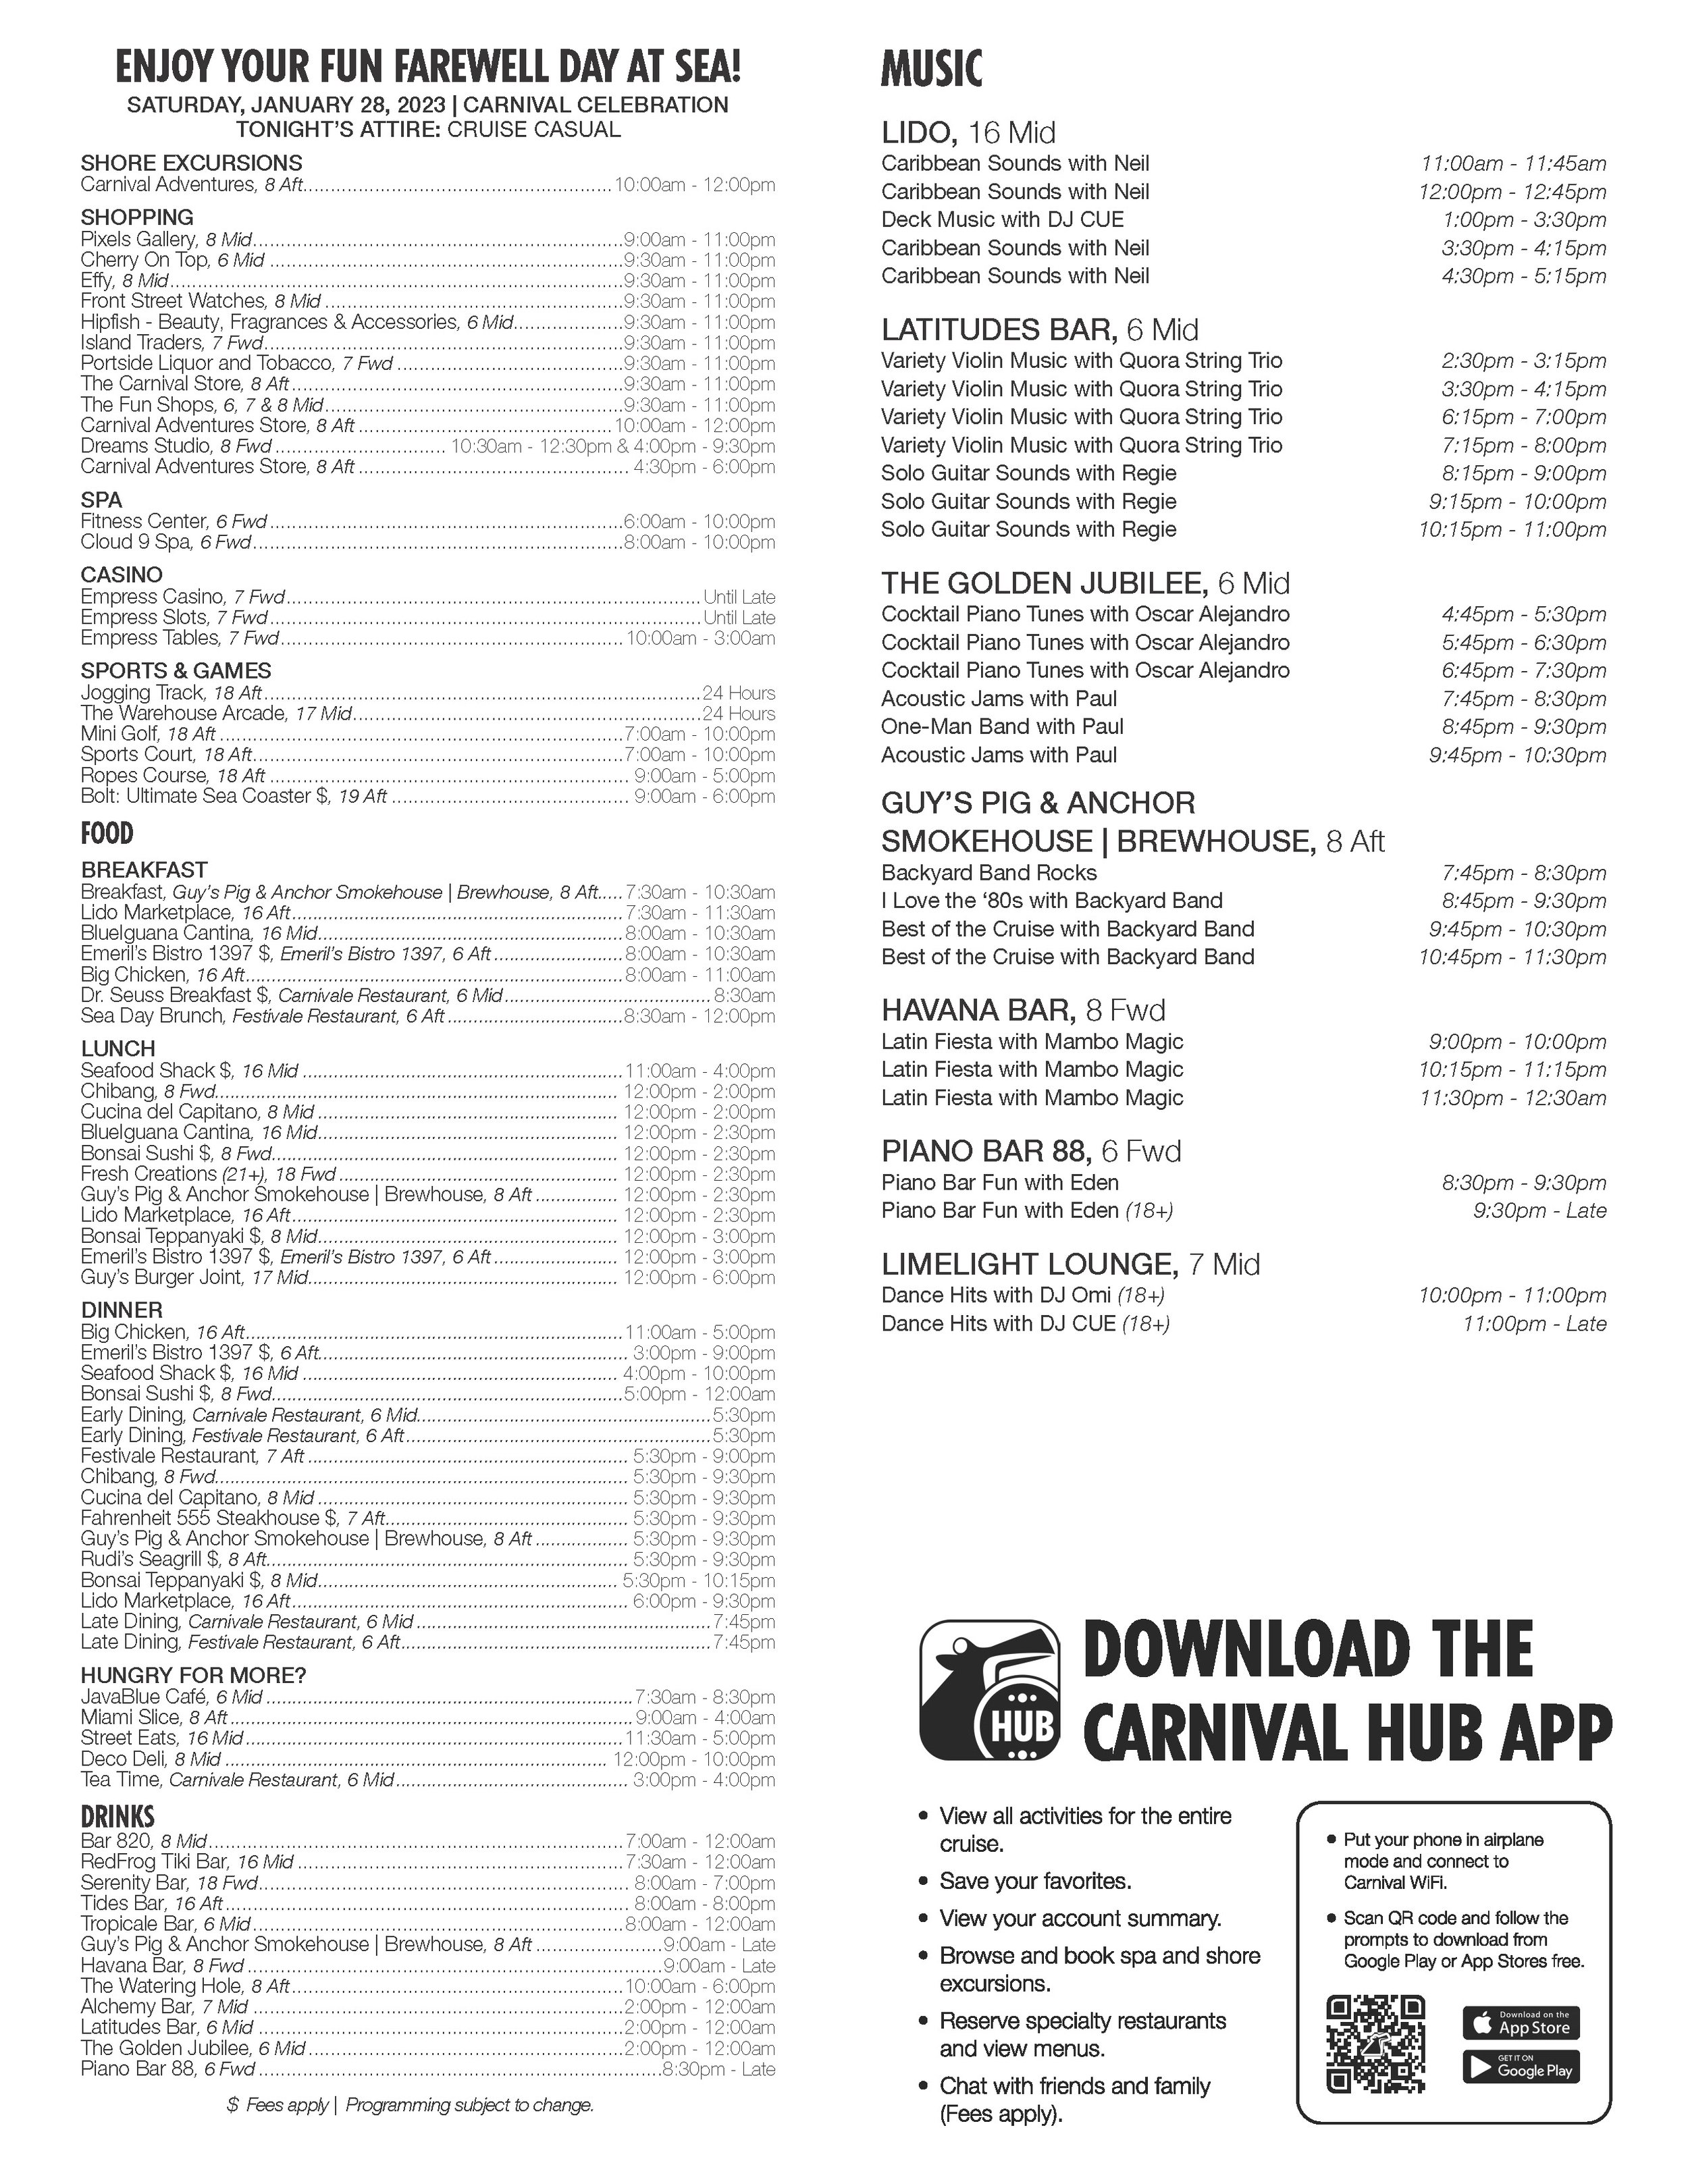 Carnival Celebration - January 28, 2023 -at sea - day 07_Page_2.jpg